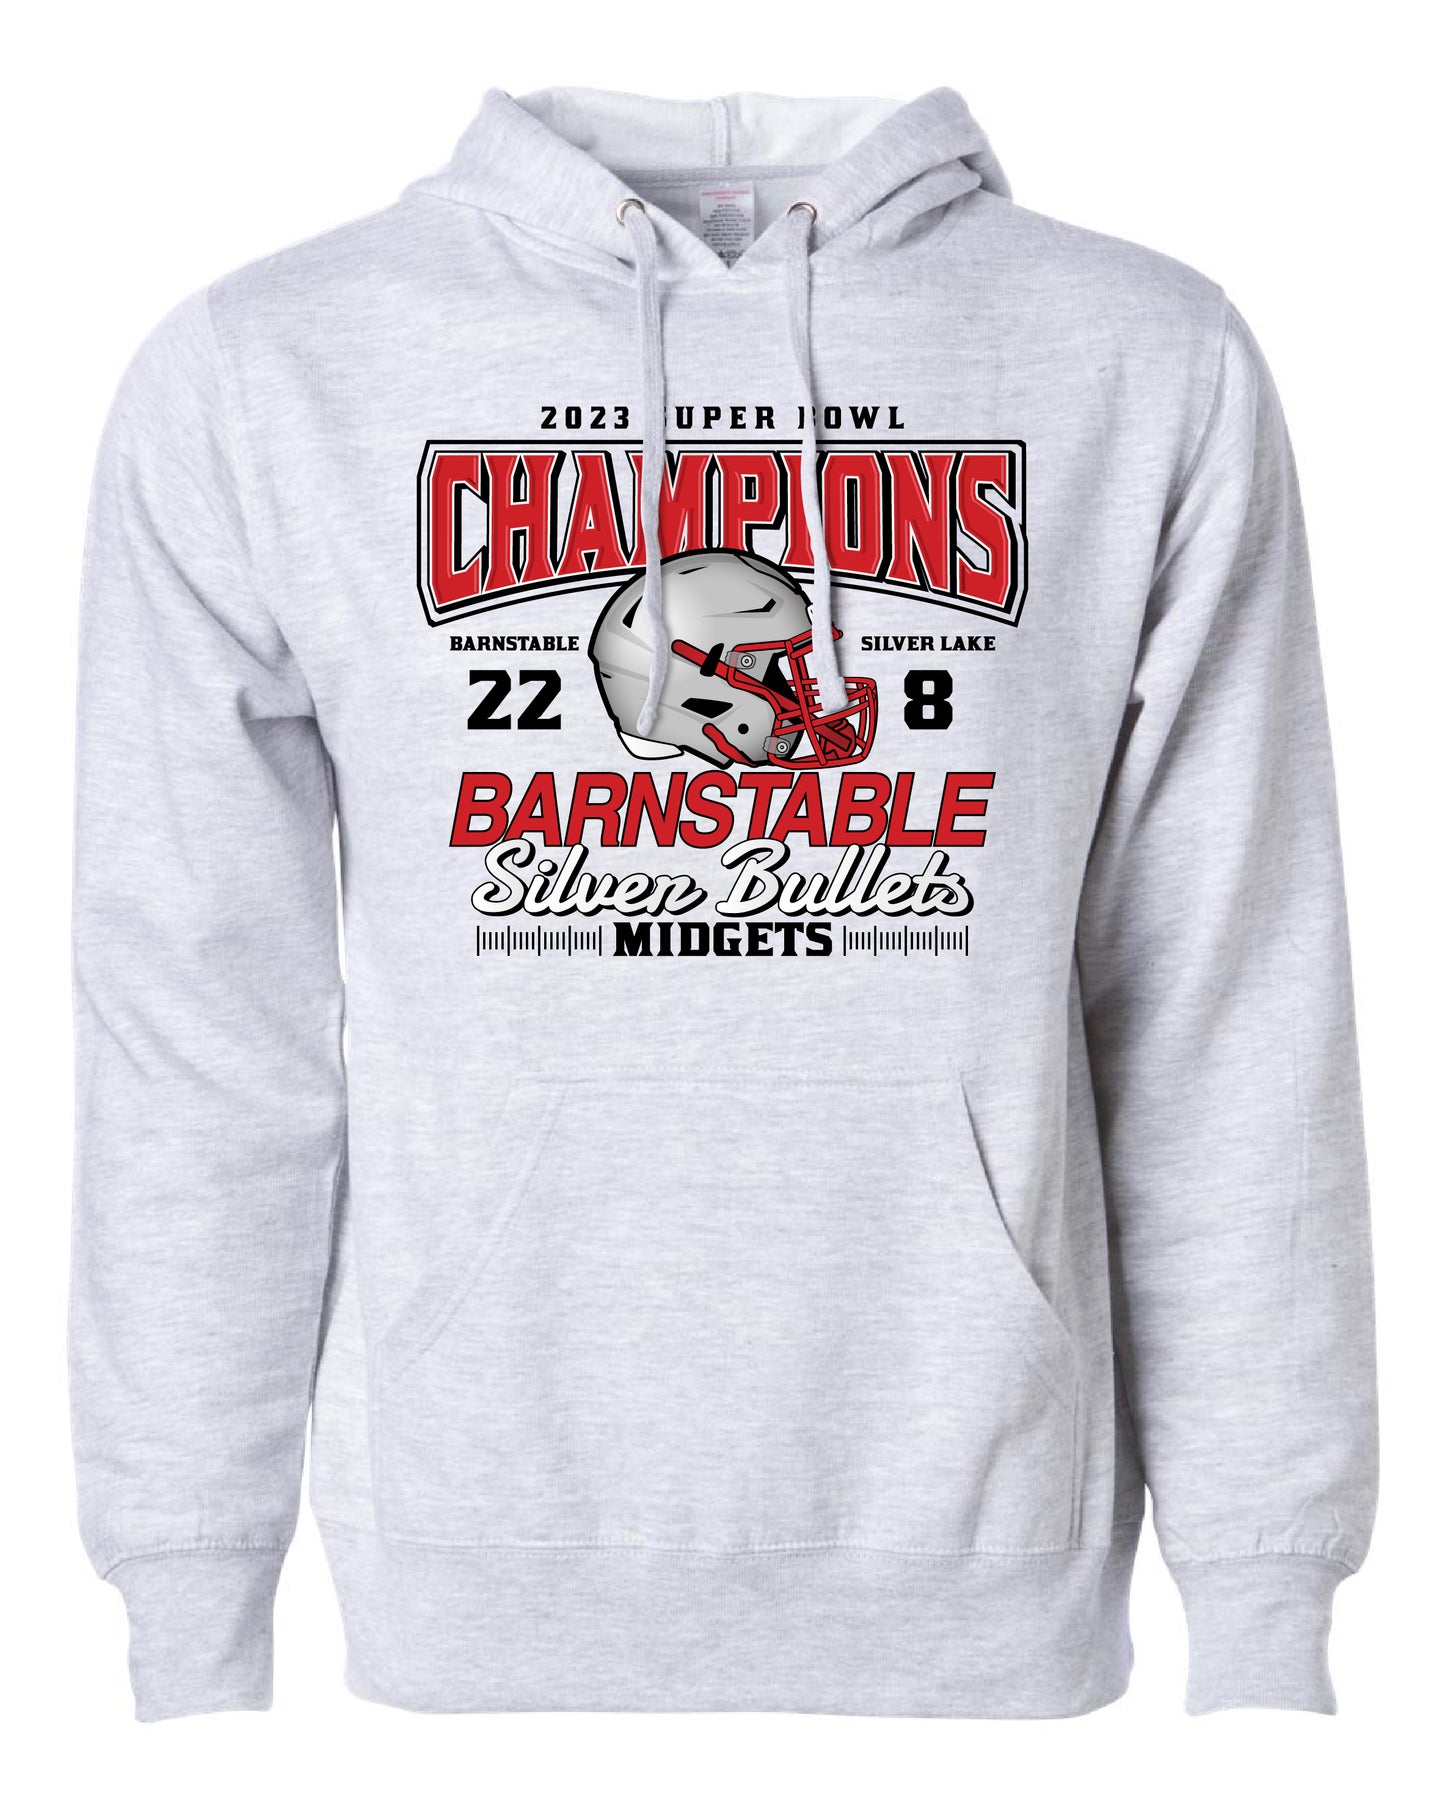 Barnstable Silver Bullets - Midgets Championship Hooded Sweatshirt